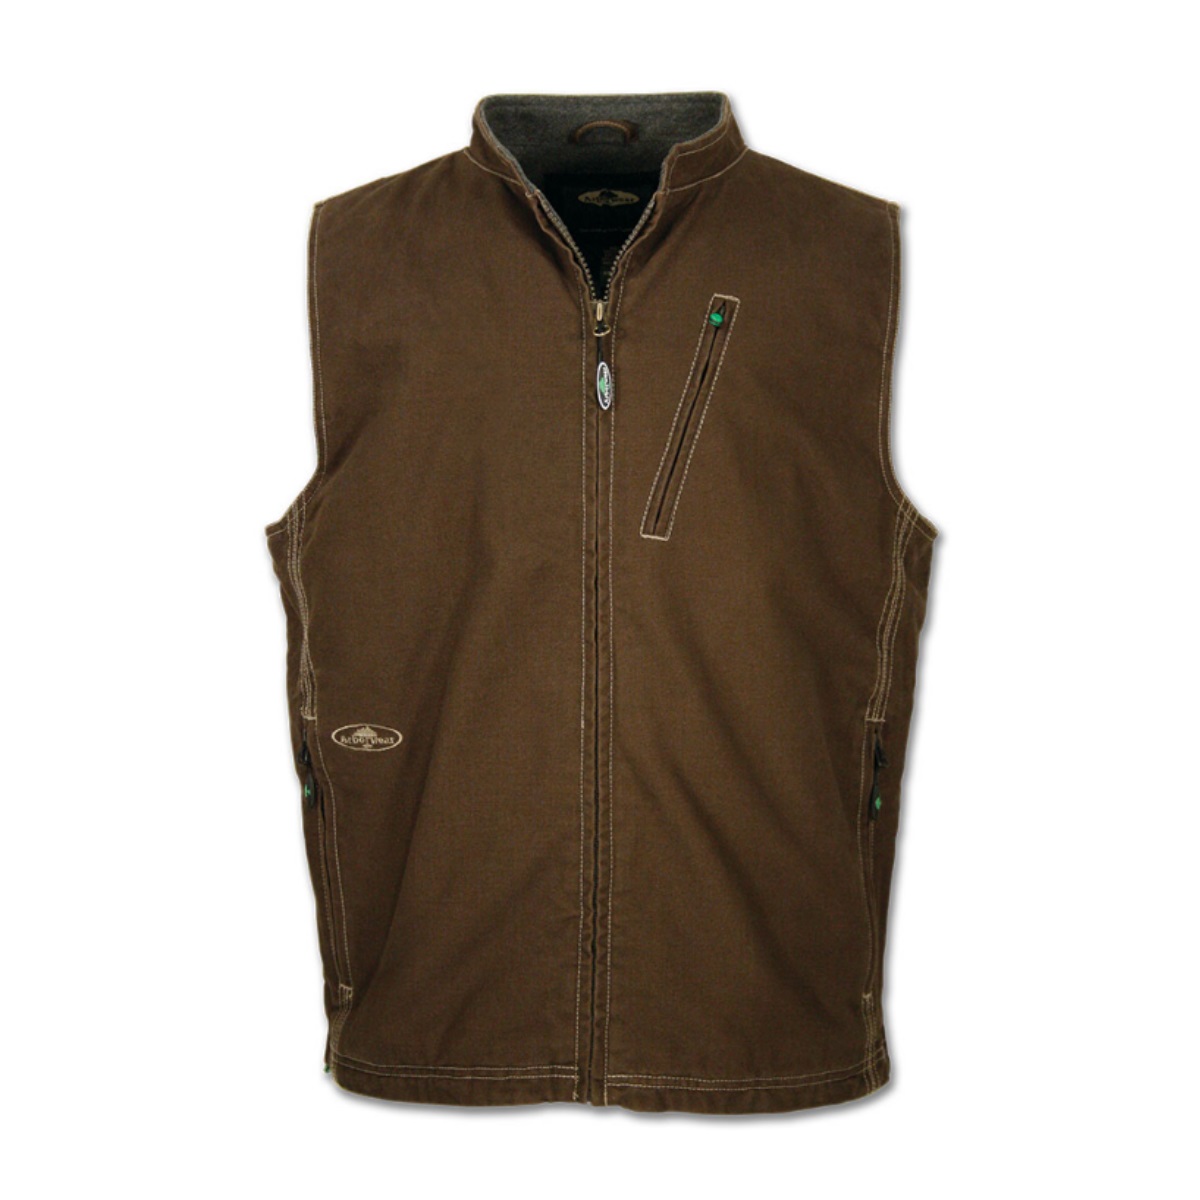 Arborwear Men's Bodark Vest